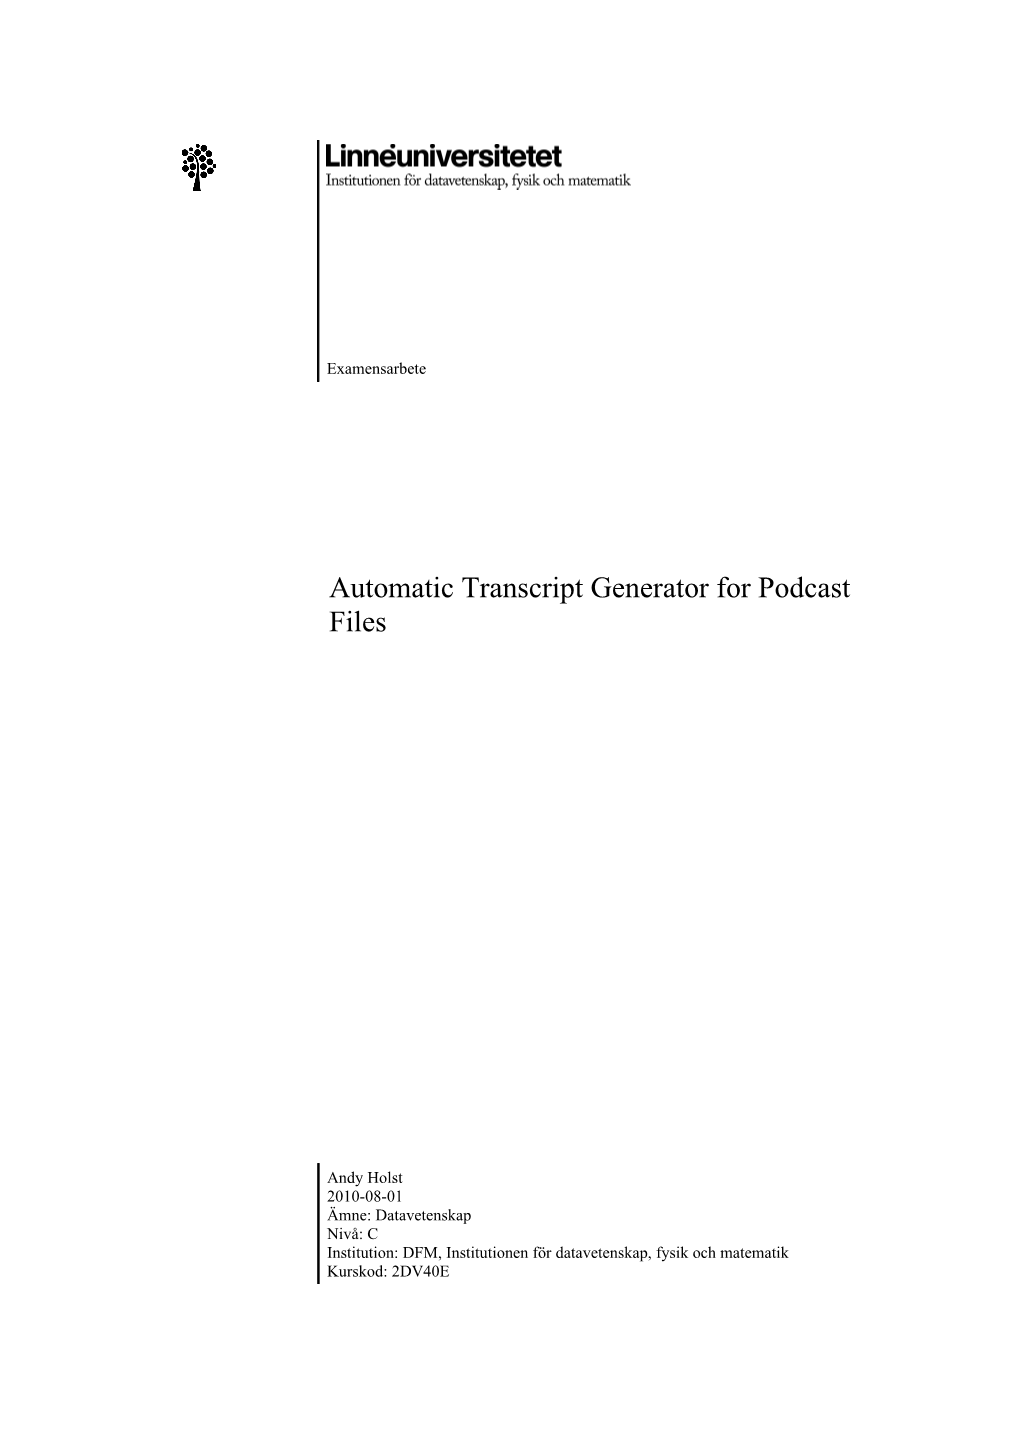 Automatic Transcript Generator for Podcast Files